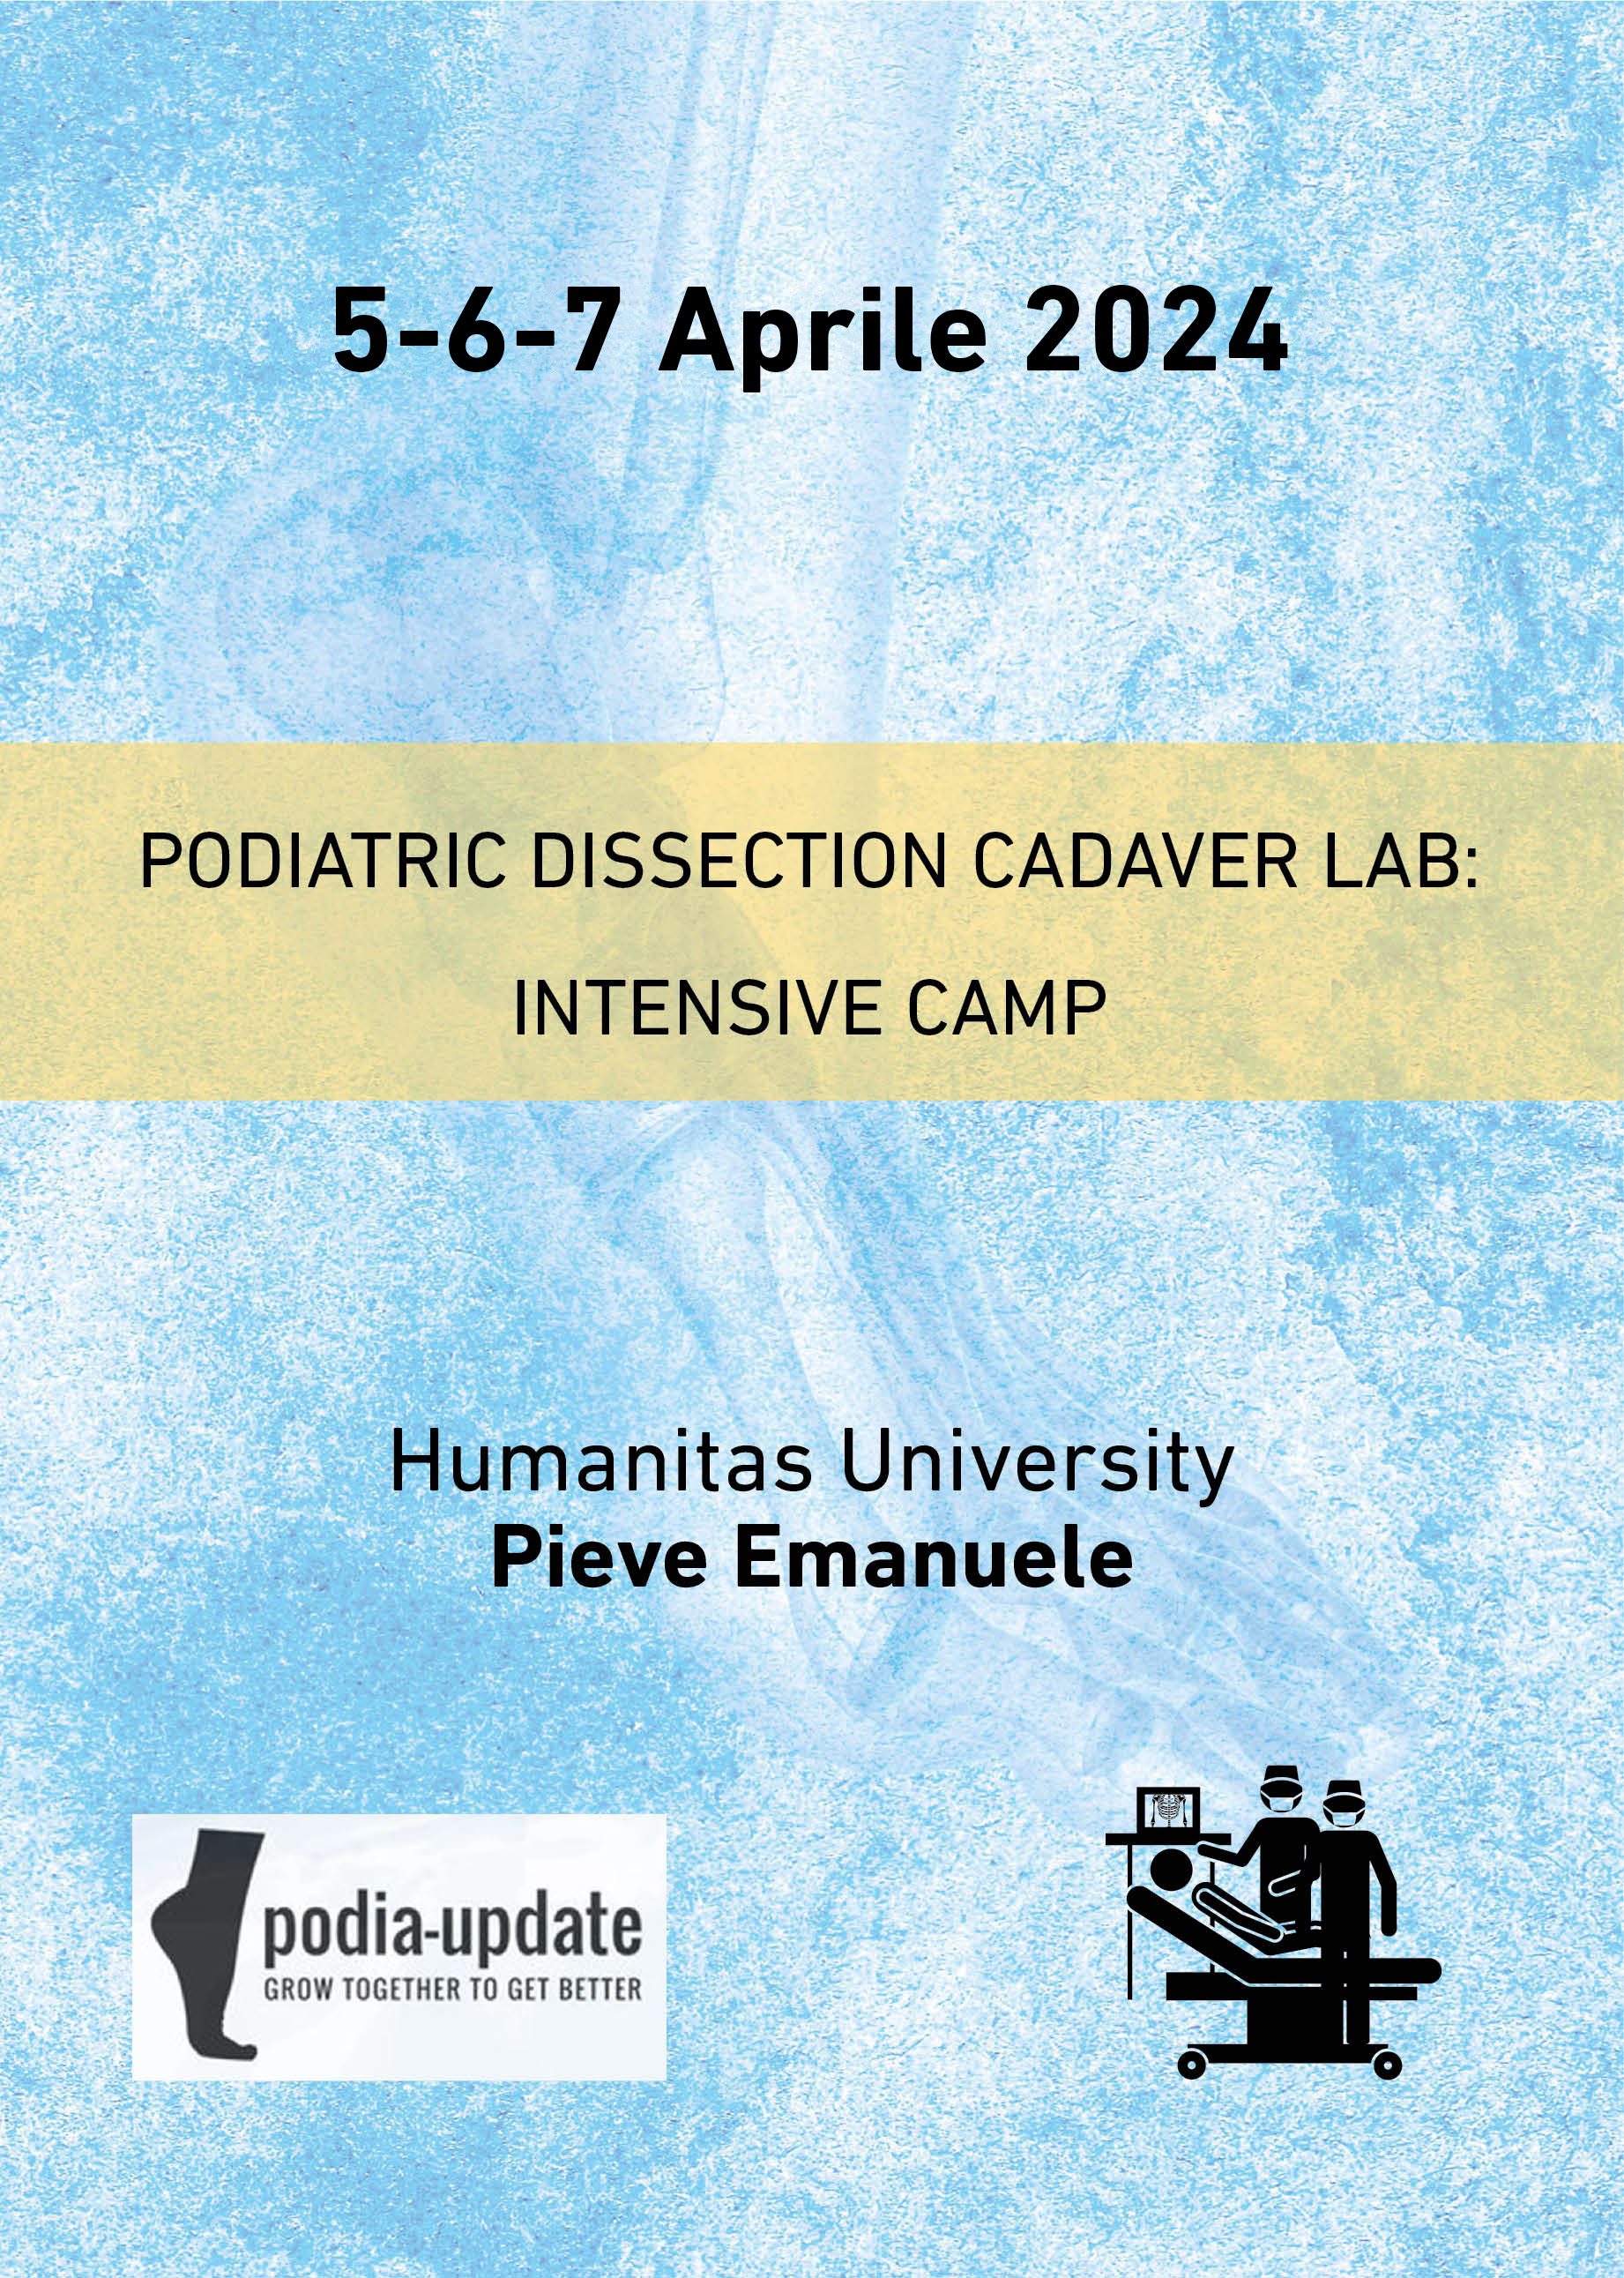 Podiatric dissection cadaver lab: Intensive Camp - Milano, 05 Aprile 2024